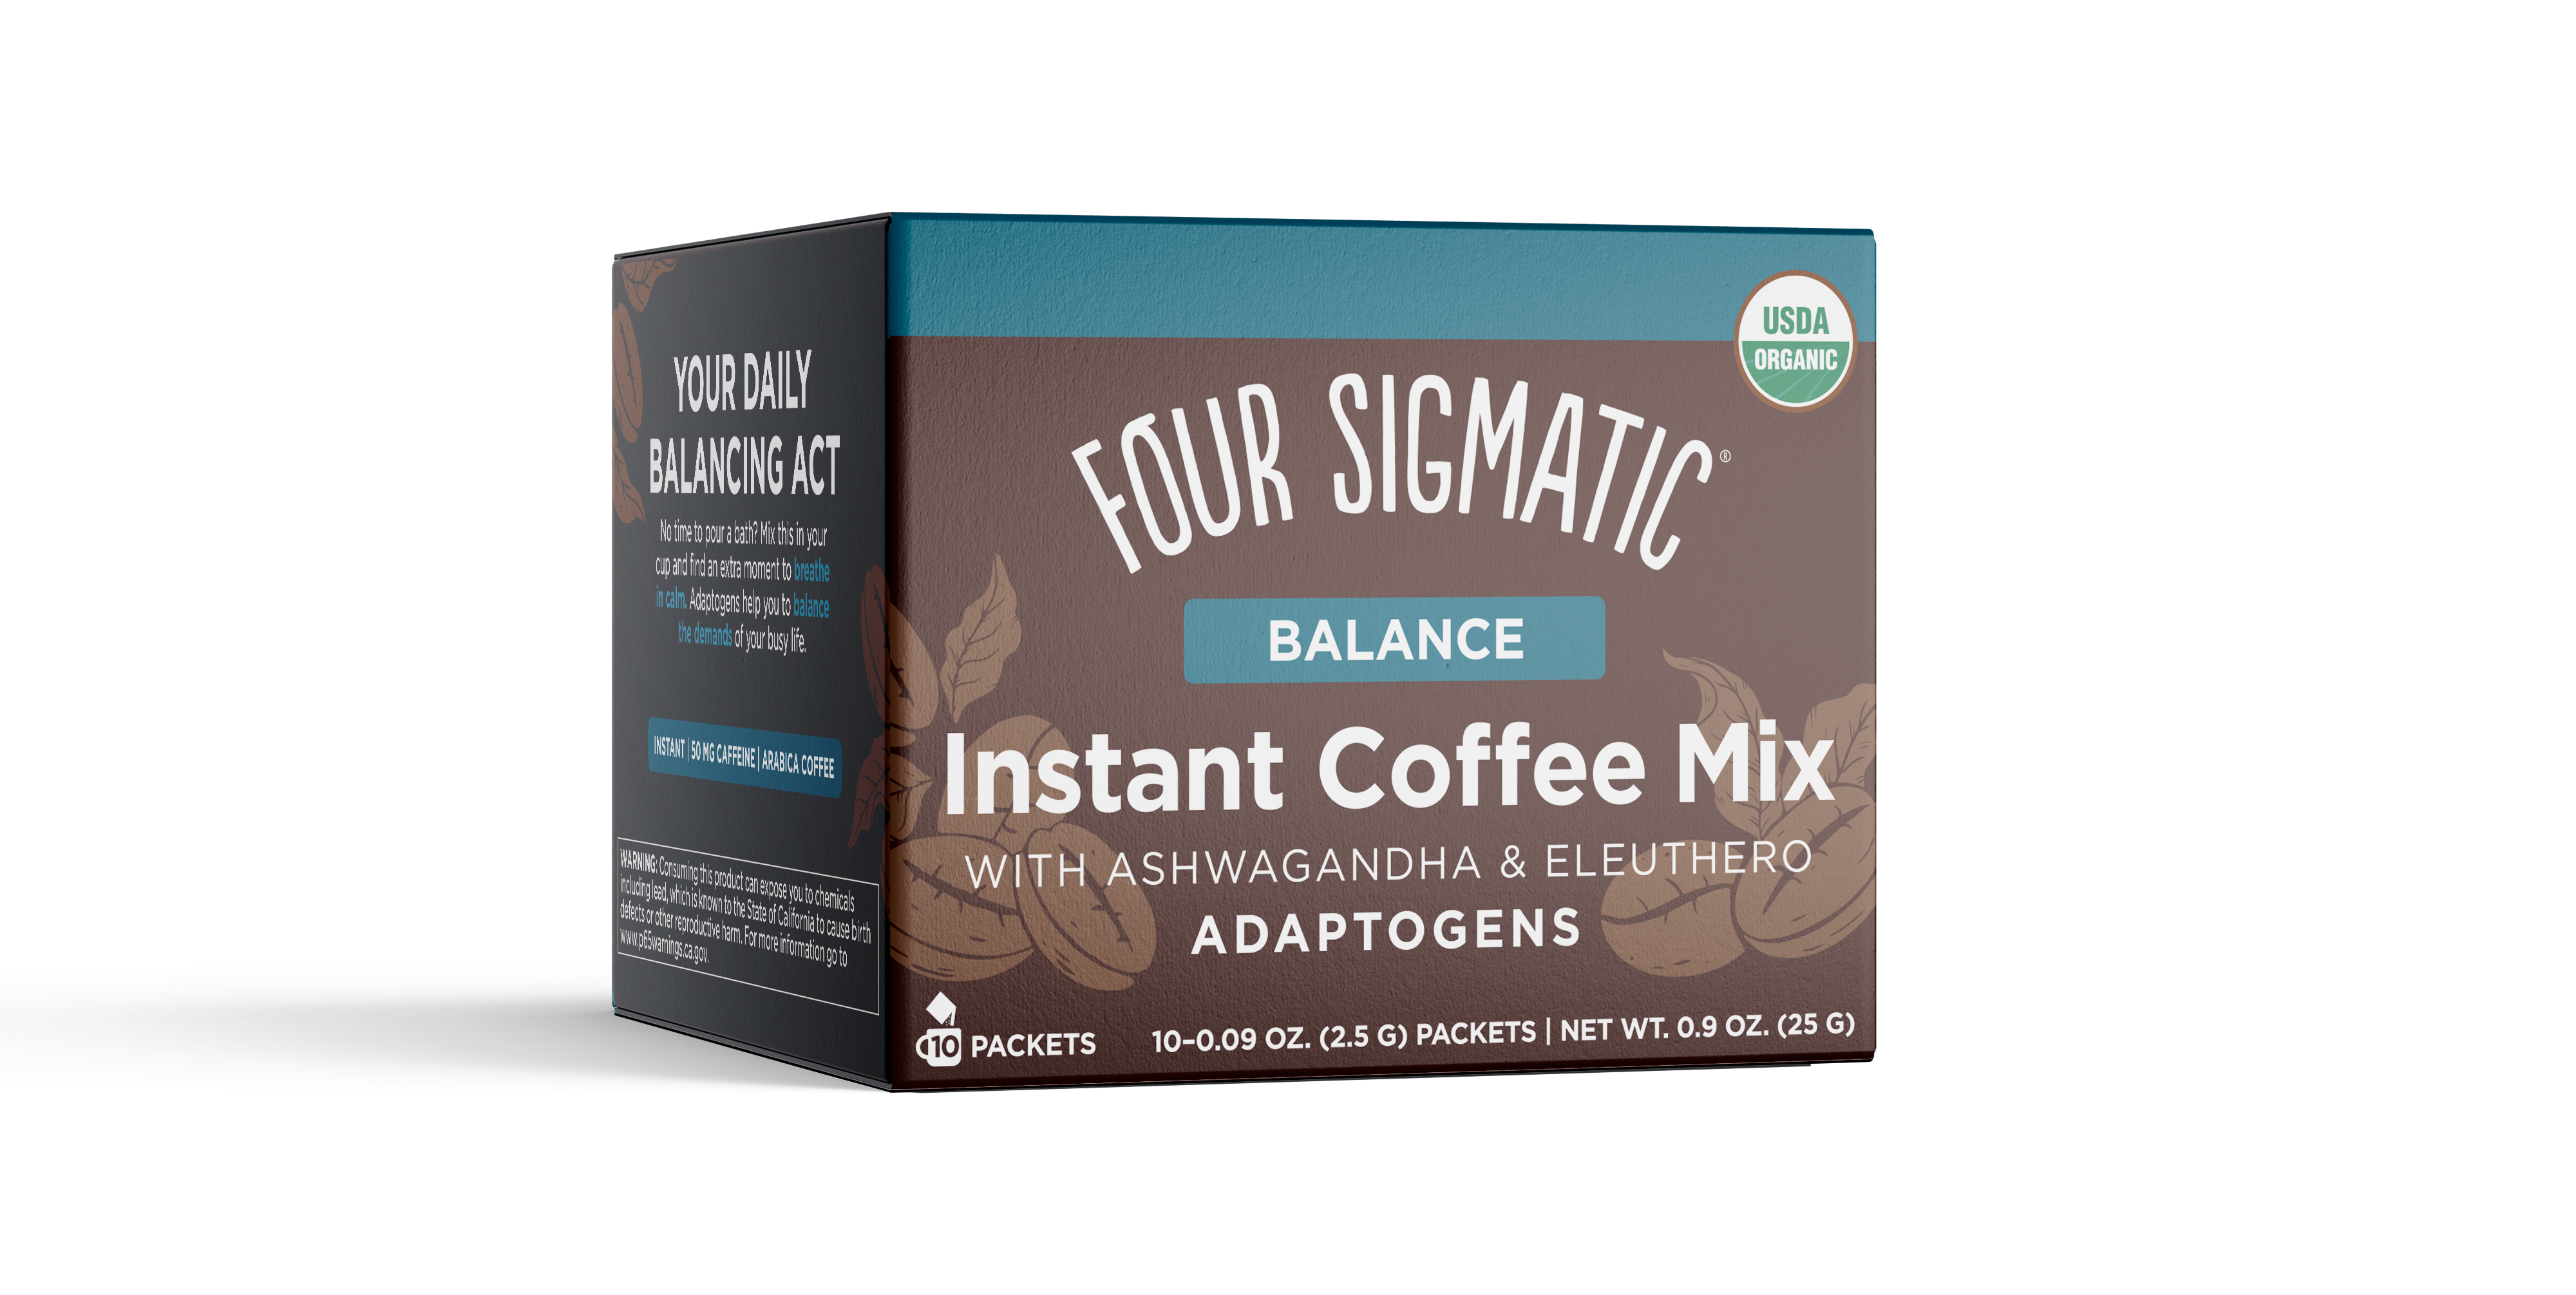 Four Sigmatic Balance Coffee Mix with Ashwagandha 10ct Box 144 units per case 0.1 oz